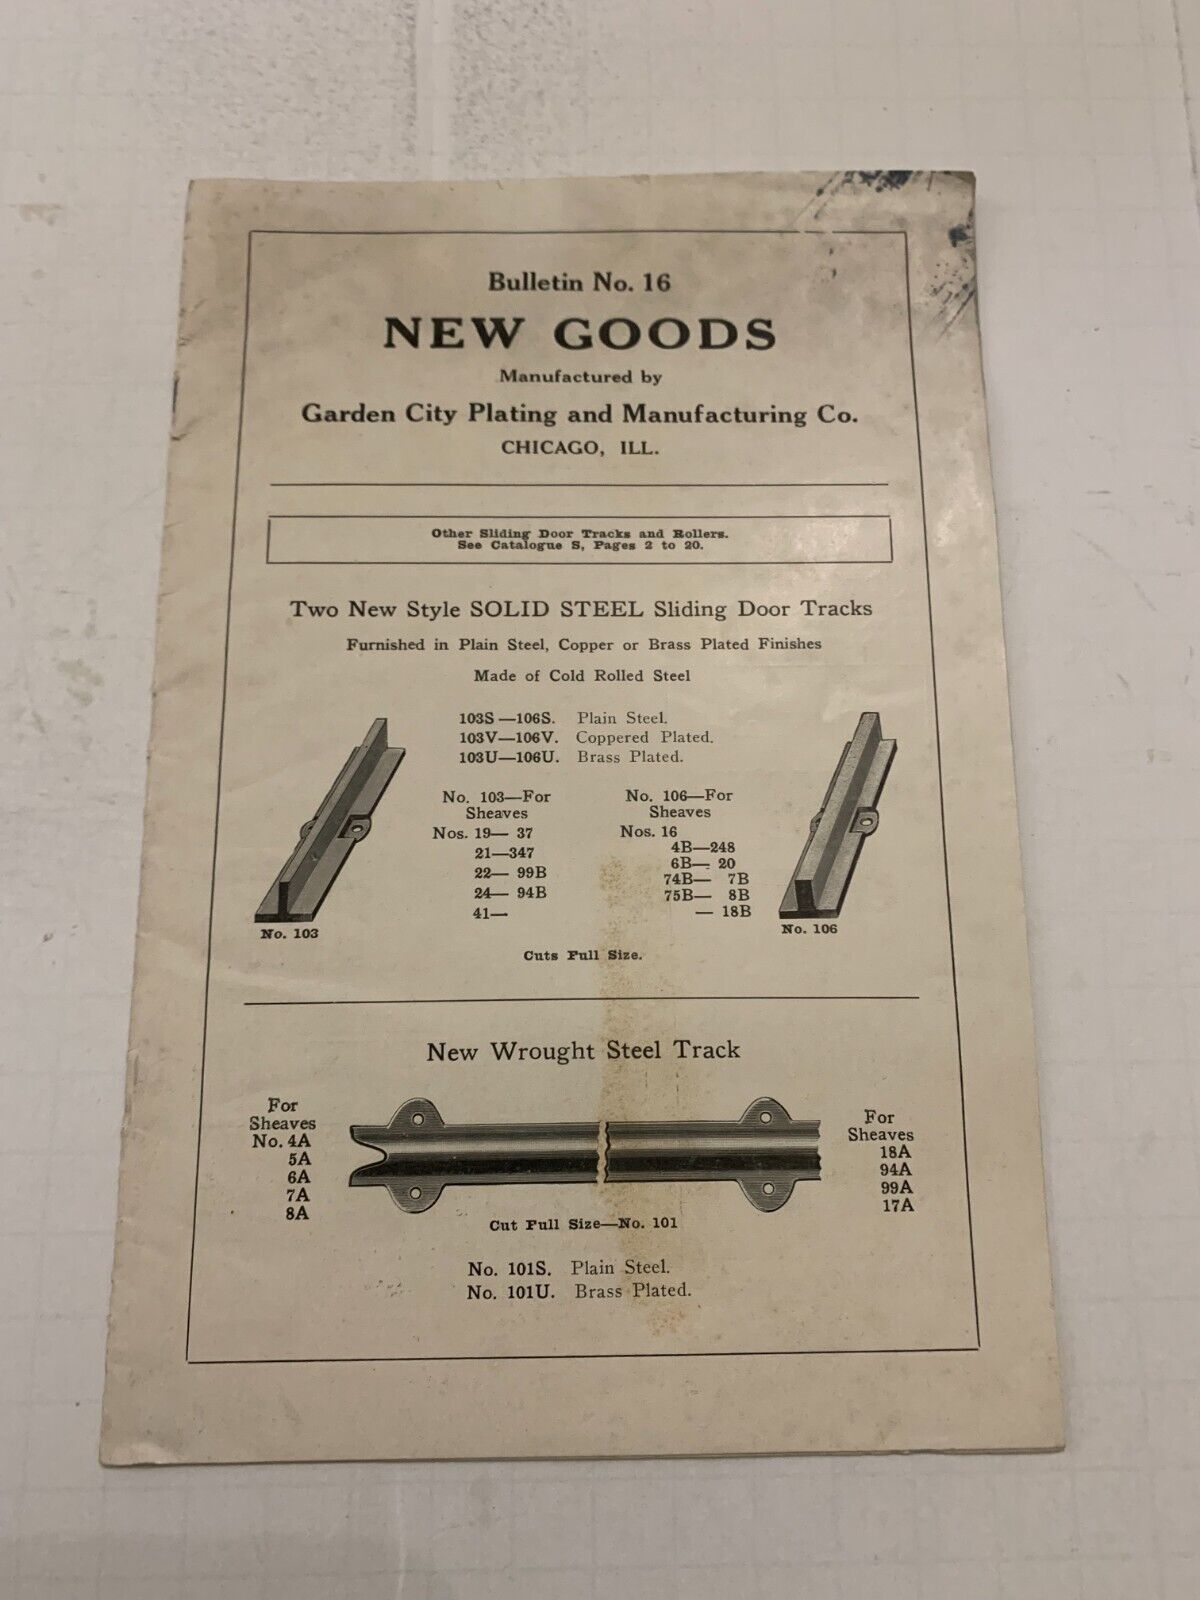 c.1920 Garden City Plating & Mfg. Co. Chicago New Goods Brochure Bulletin No. 16